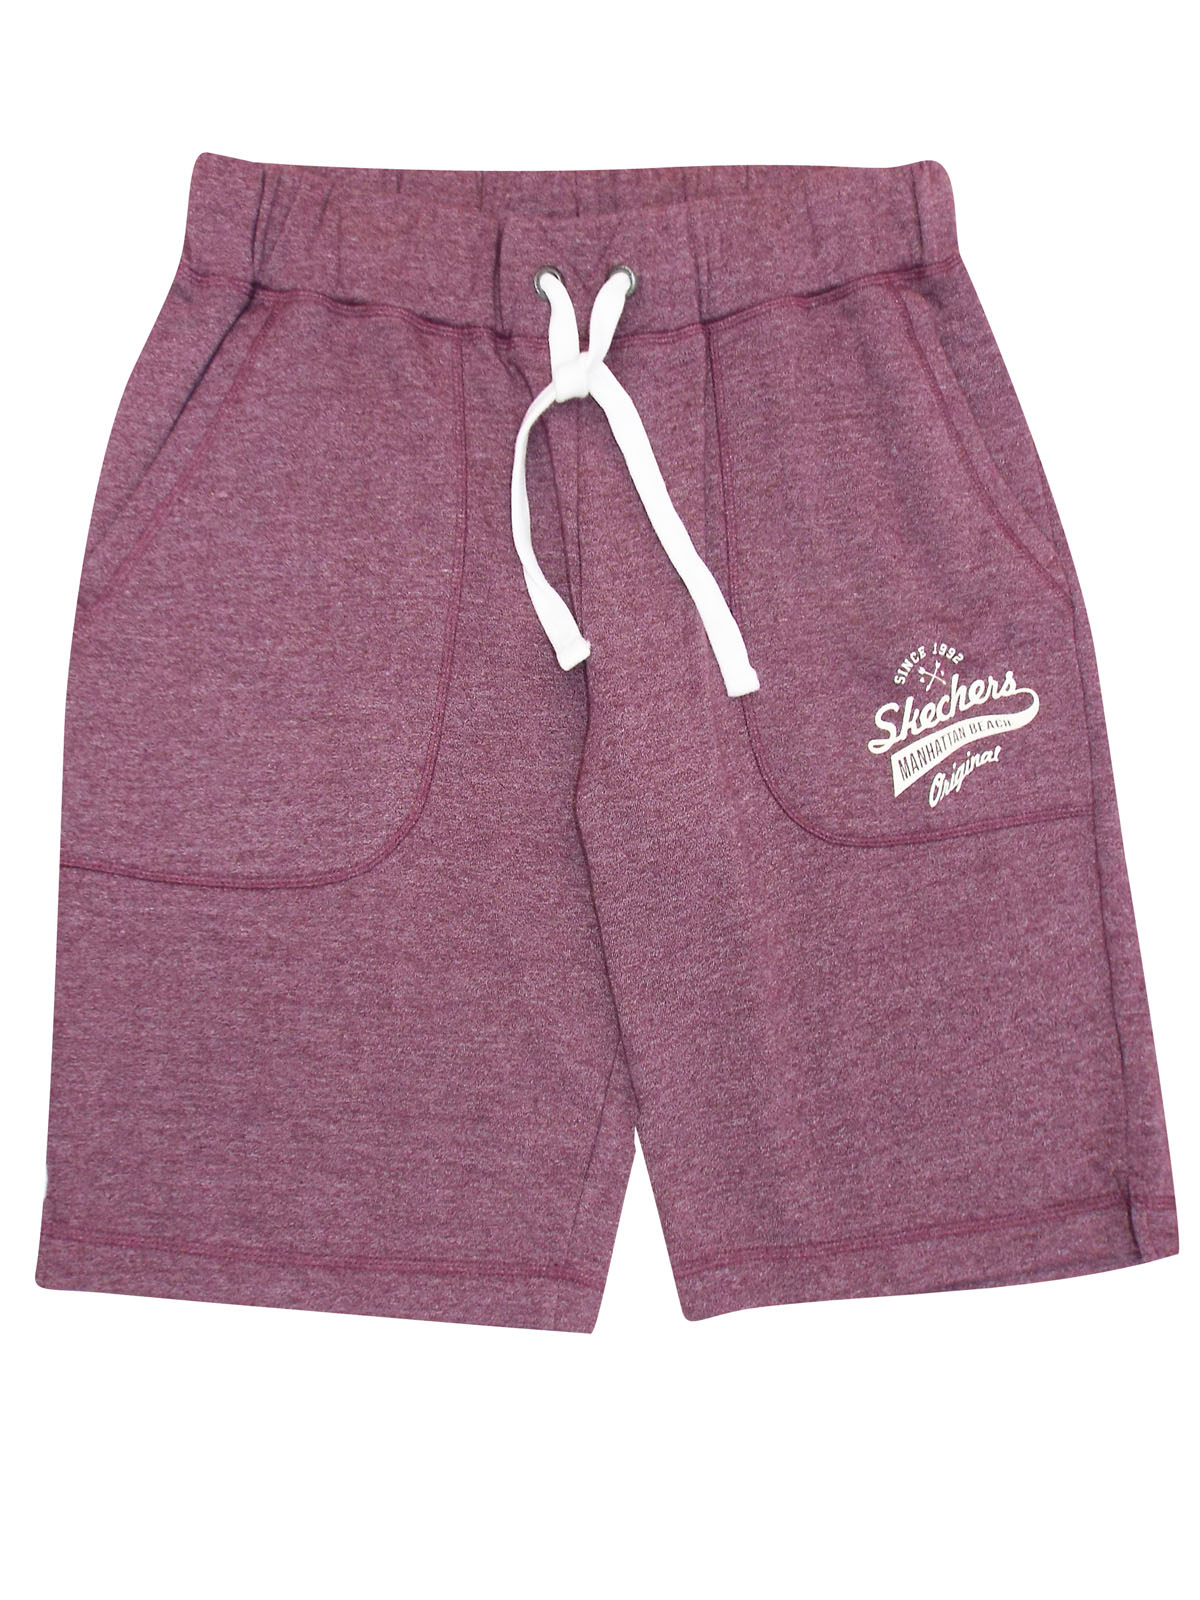 skechers shorts pink